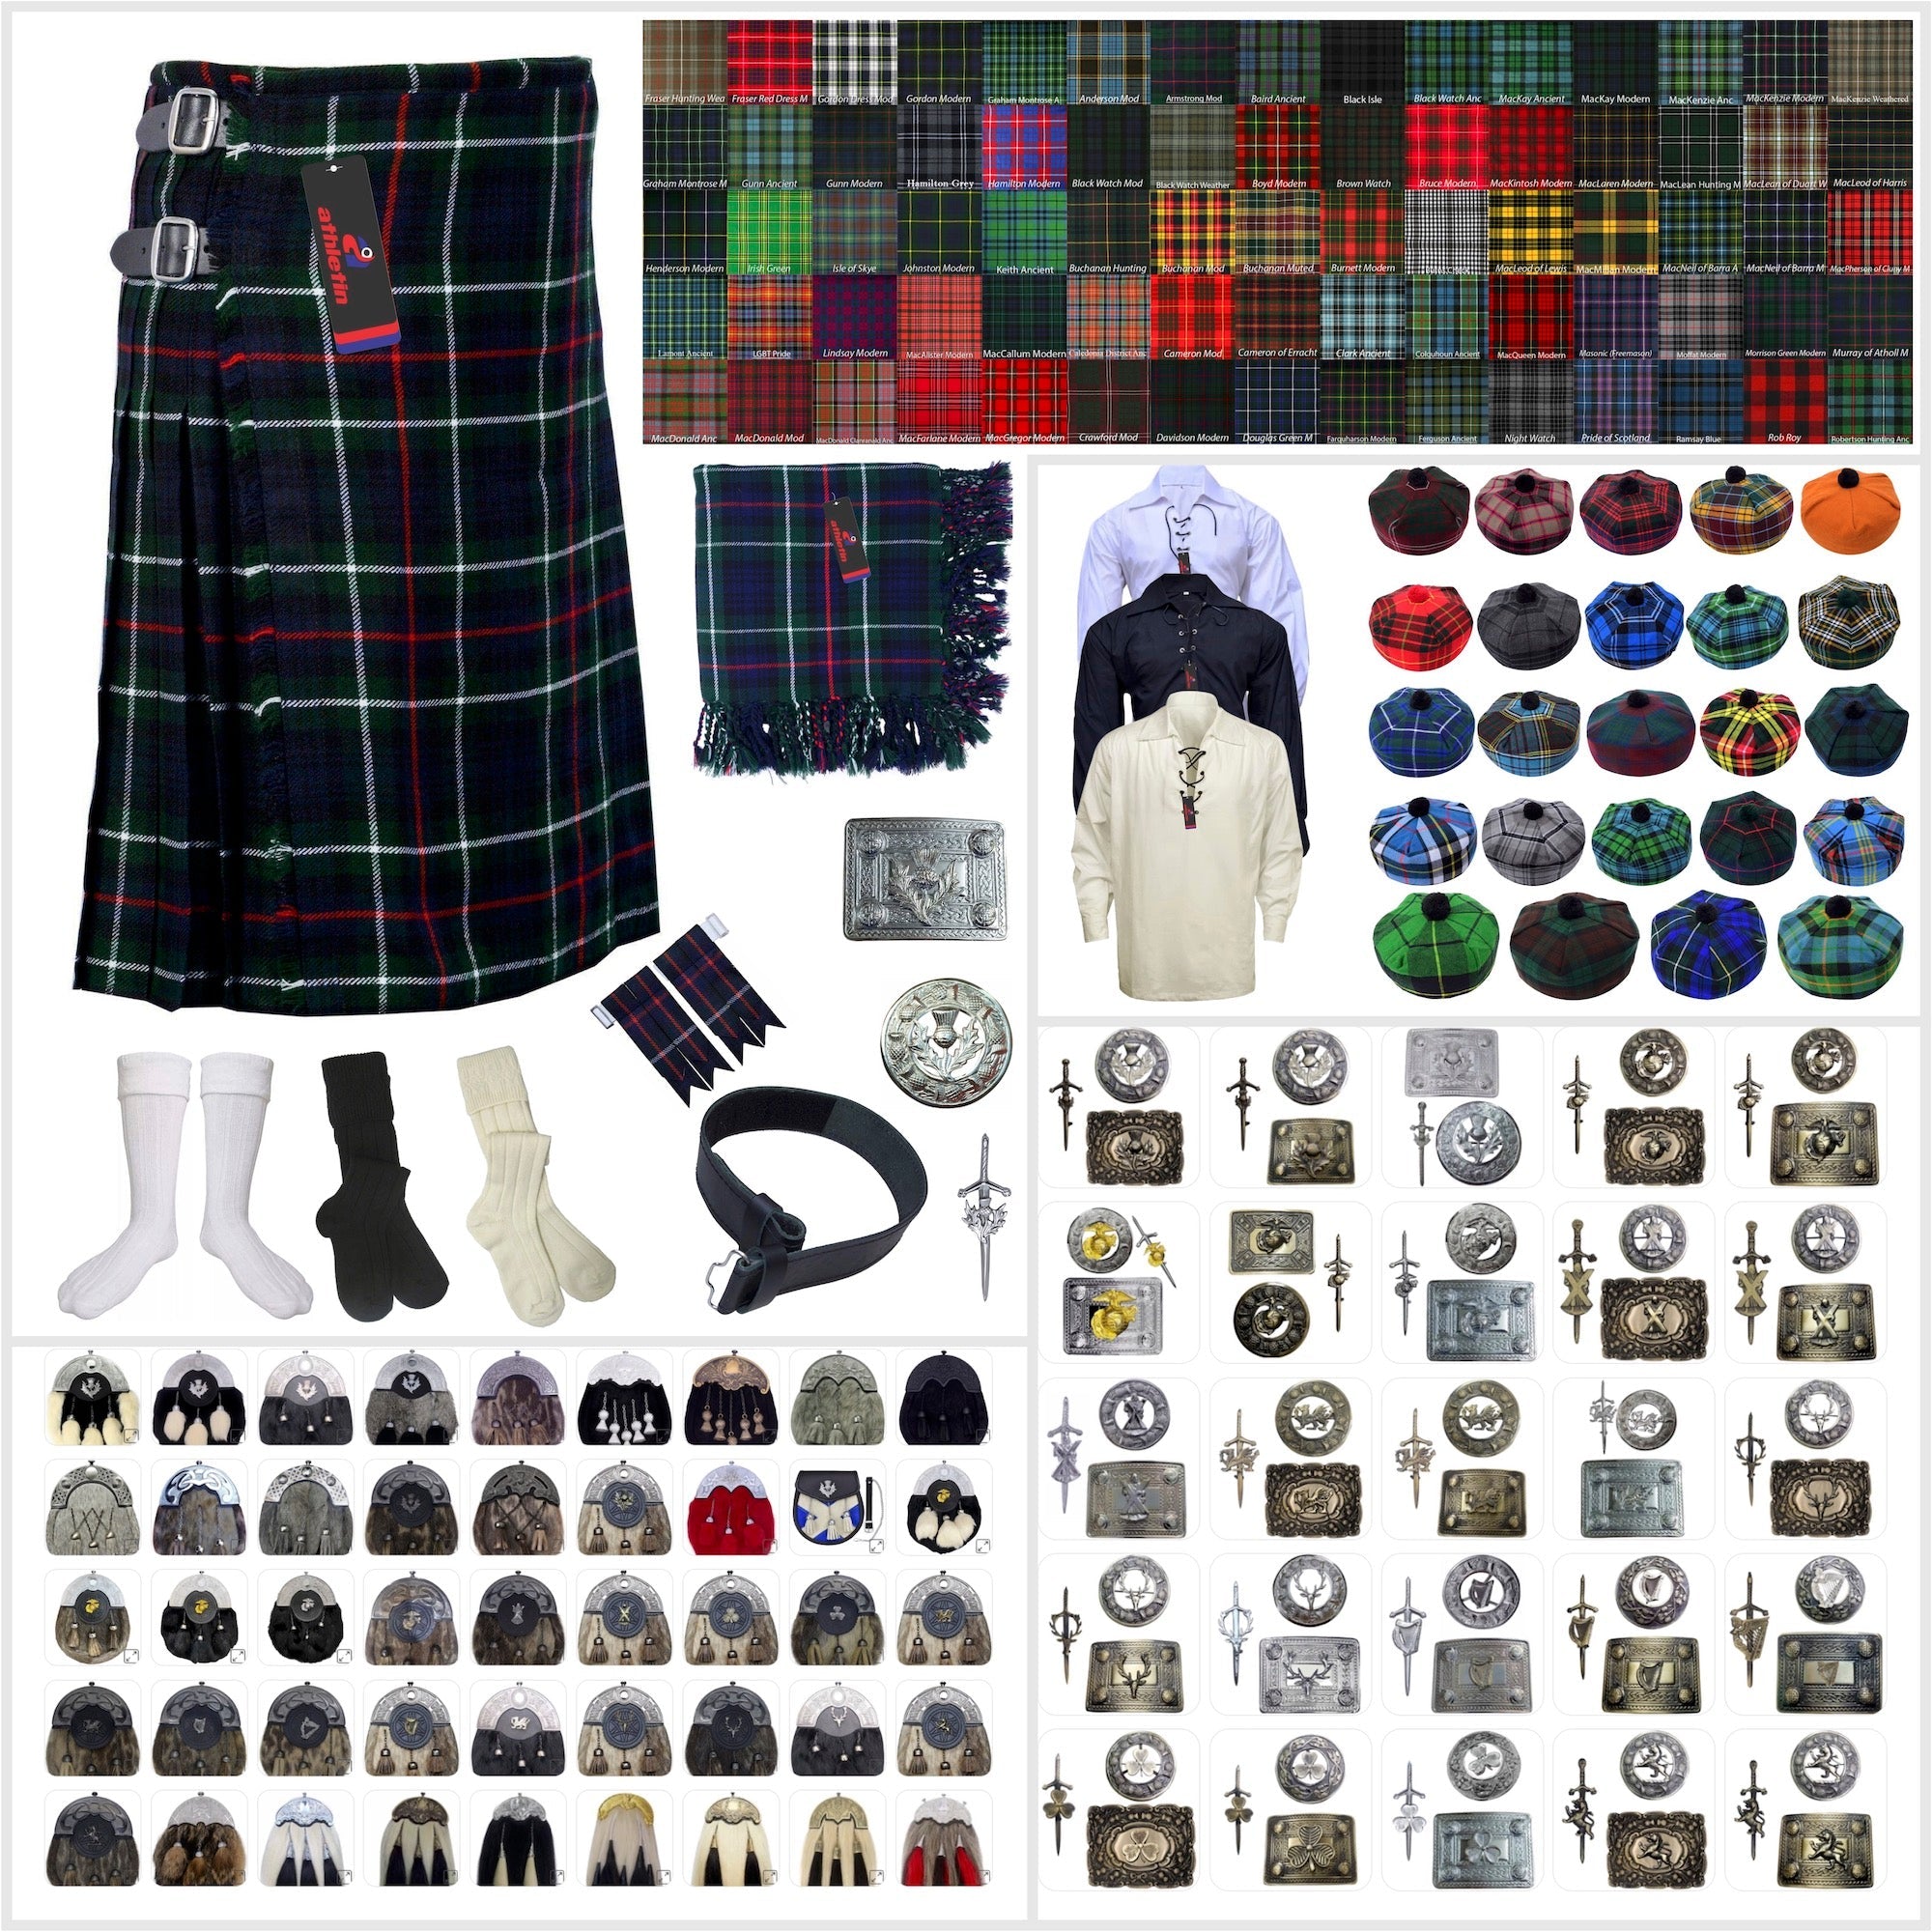 Authentic Mackenzie Tartan Kilt Outfit - Celebrate Scottish Tradition